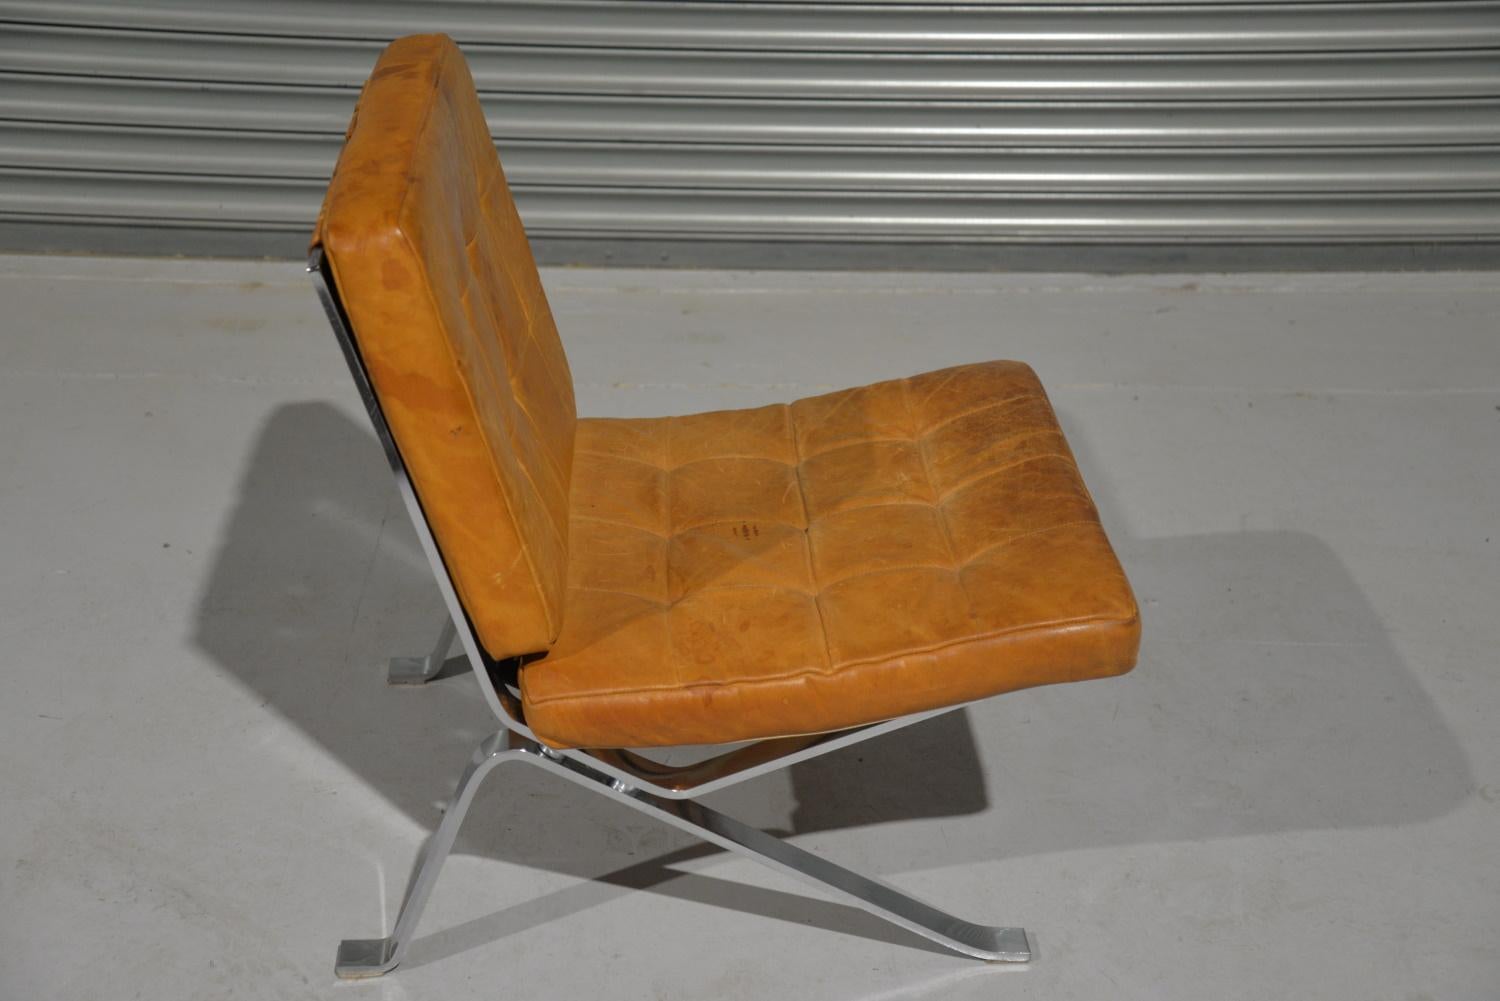 Vintage Rh-301 Lounge Chair by Robert Haussmann for De Sede, Switzerland, 1954 For Sale 2